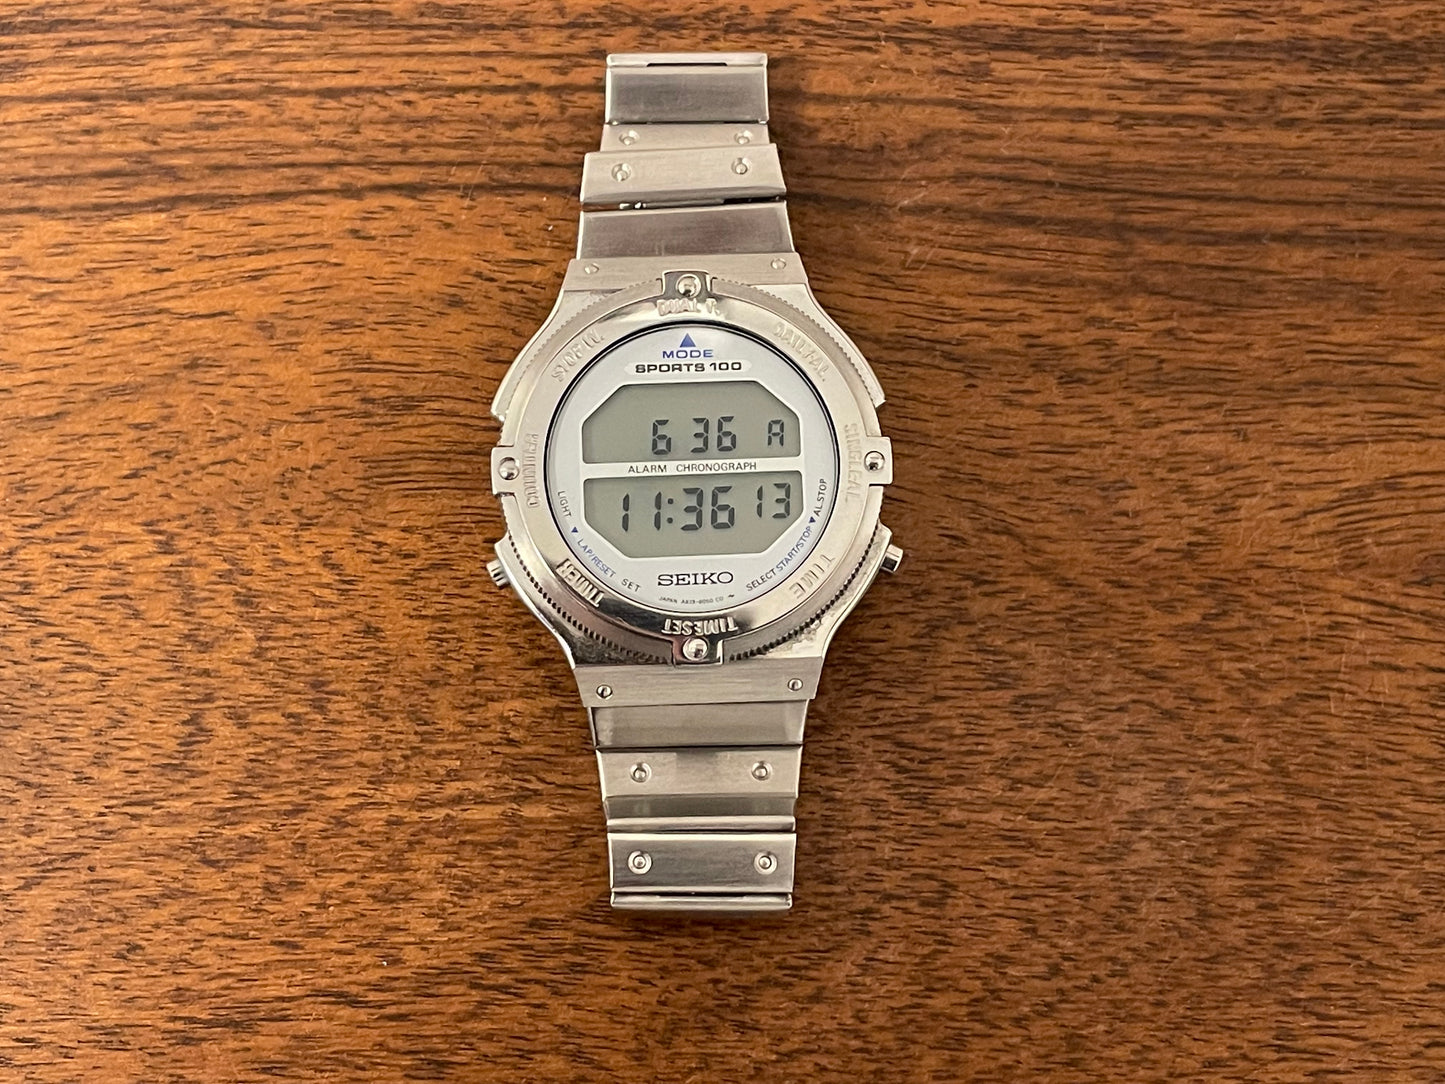 (1983) Seiko A829-6050 "Astronaut" Sports 100 Alarm Chronograph - LCD/digital (serviced)